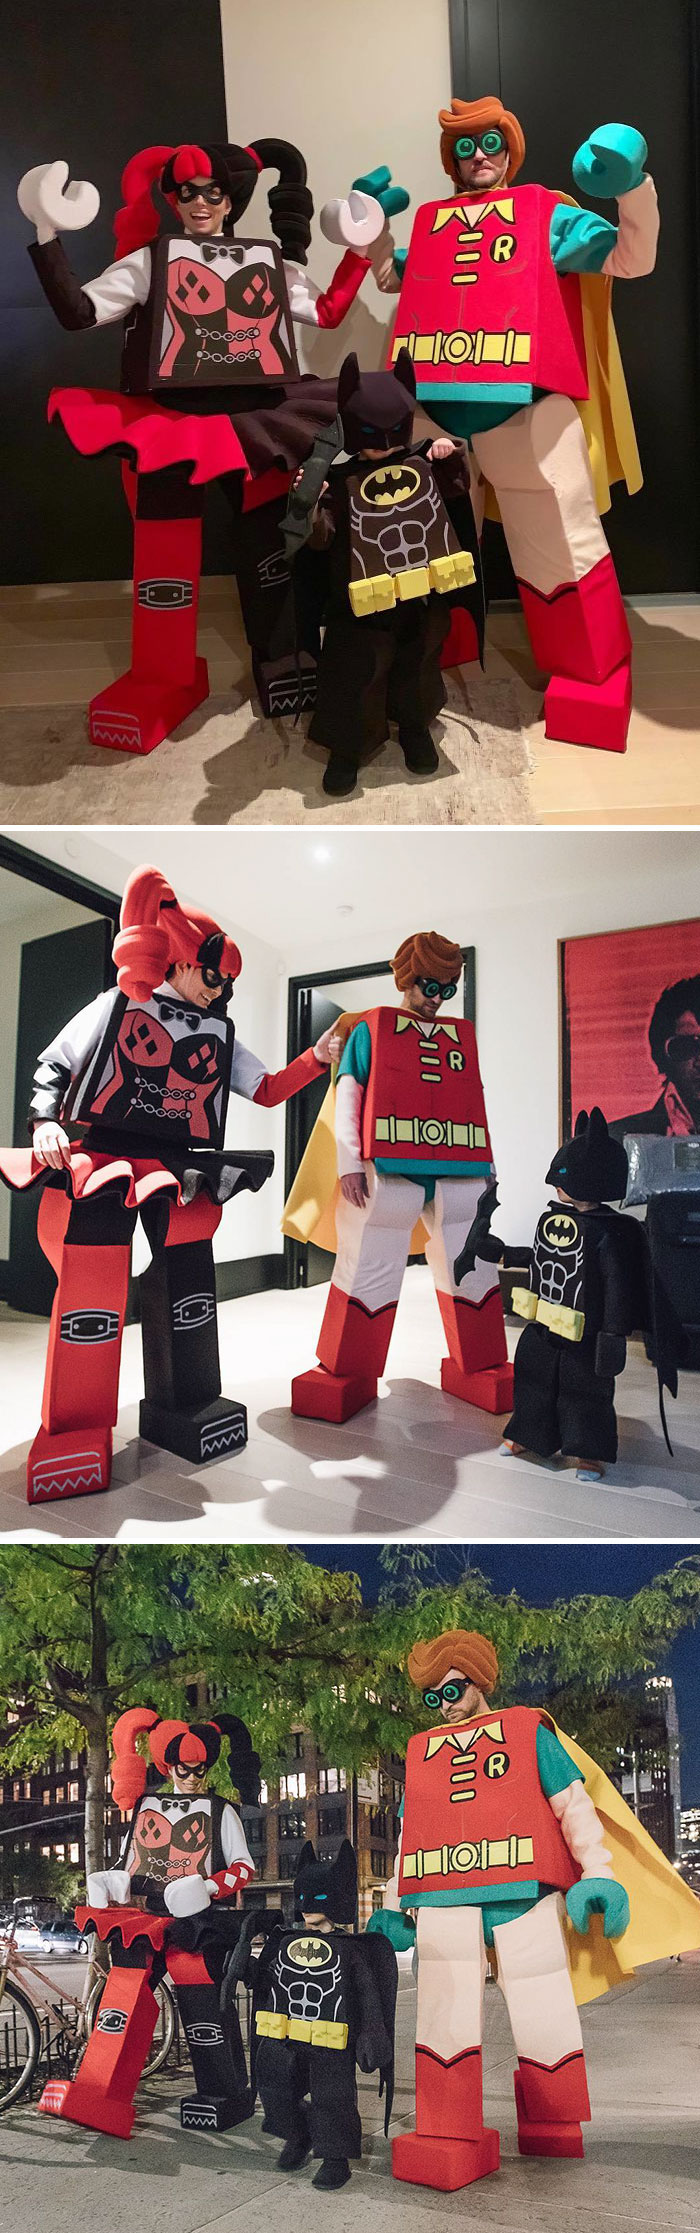 Lego famille deguisement drole groupe, la meilleure idée costume halloween